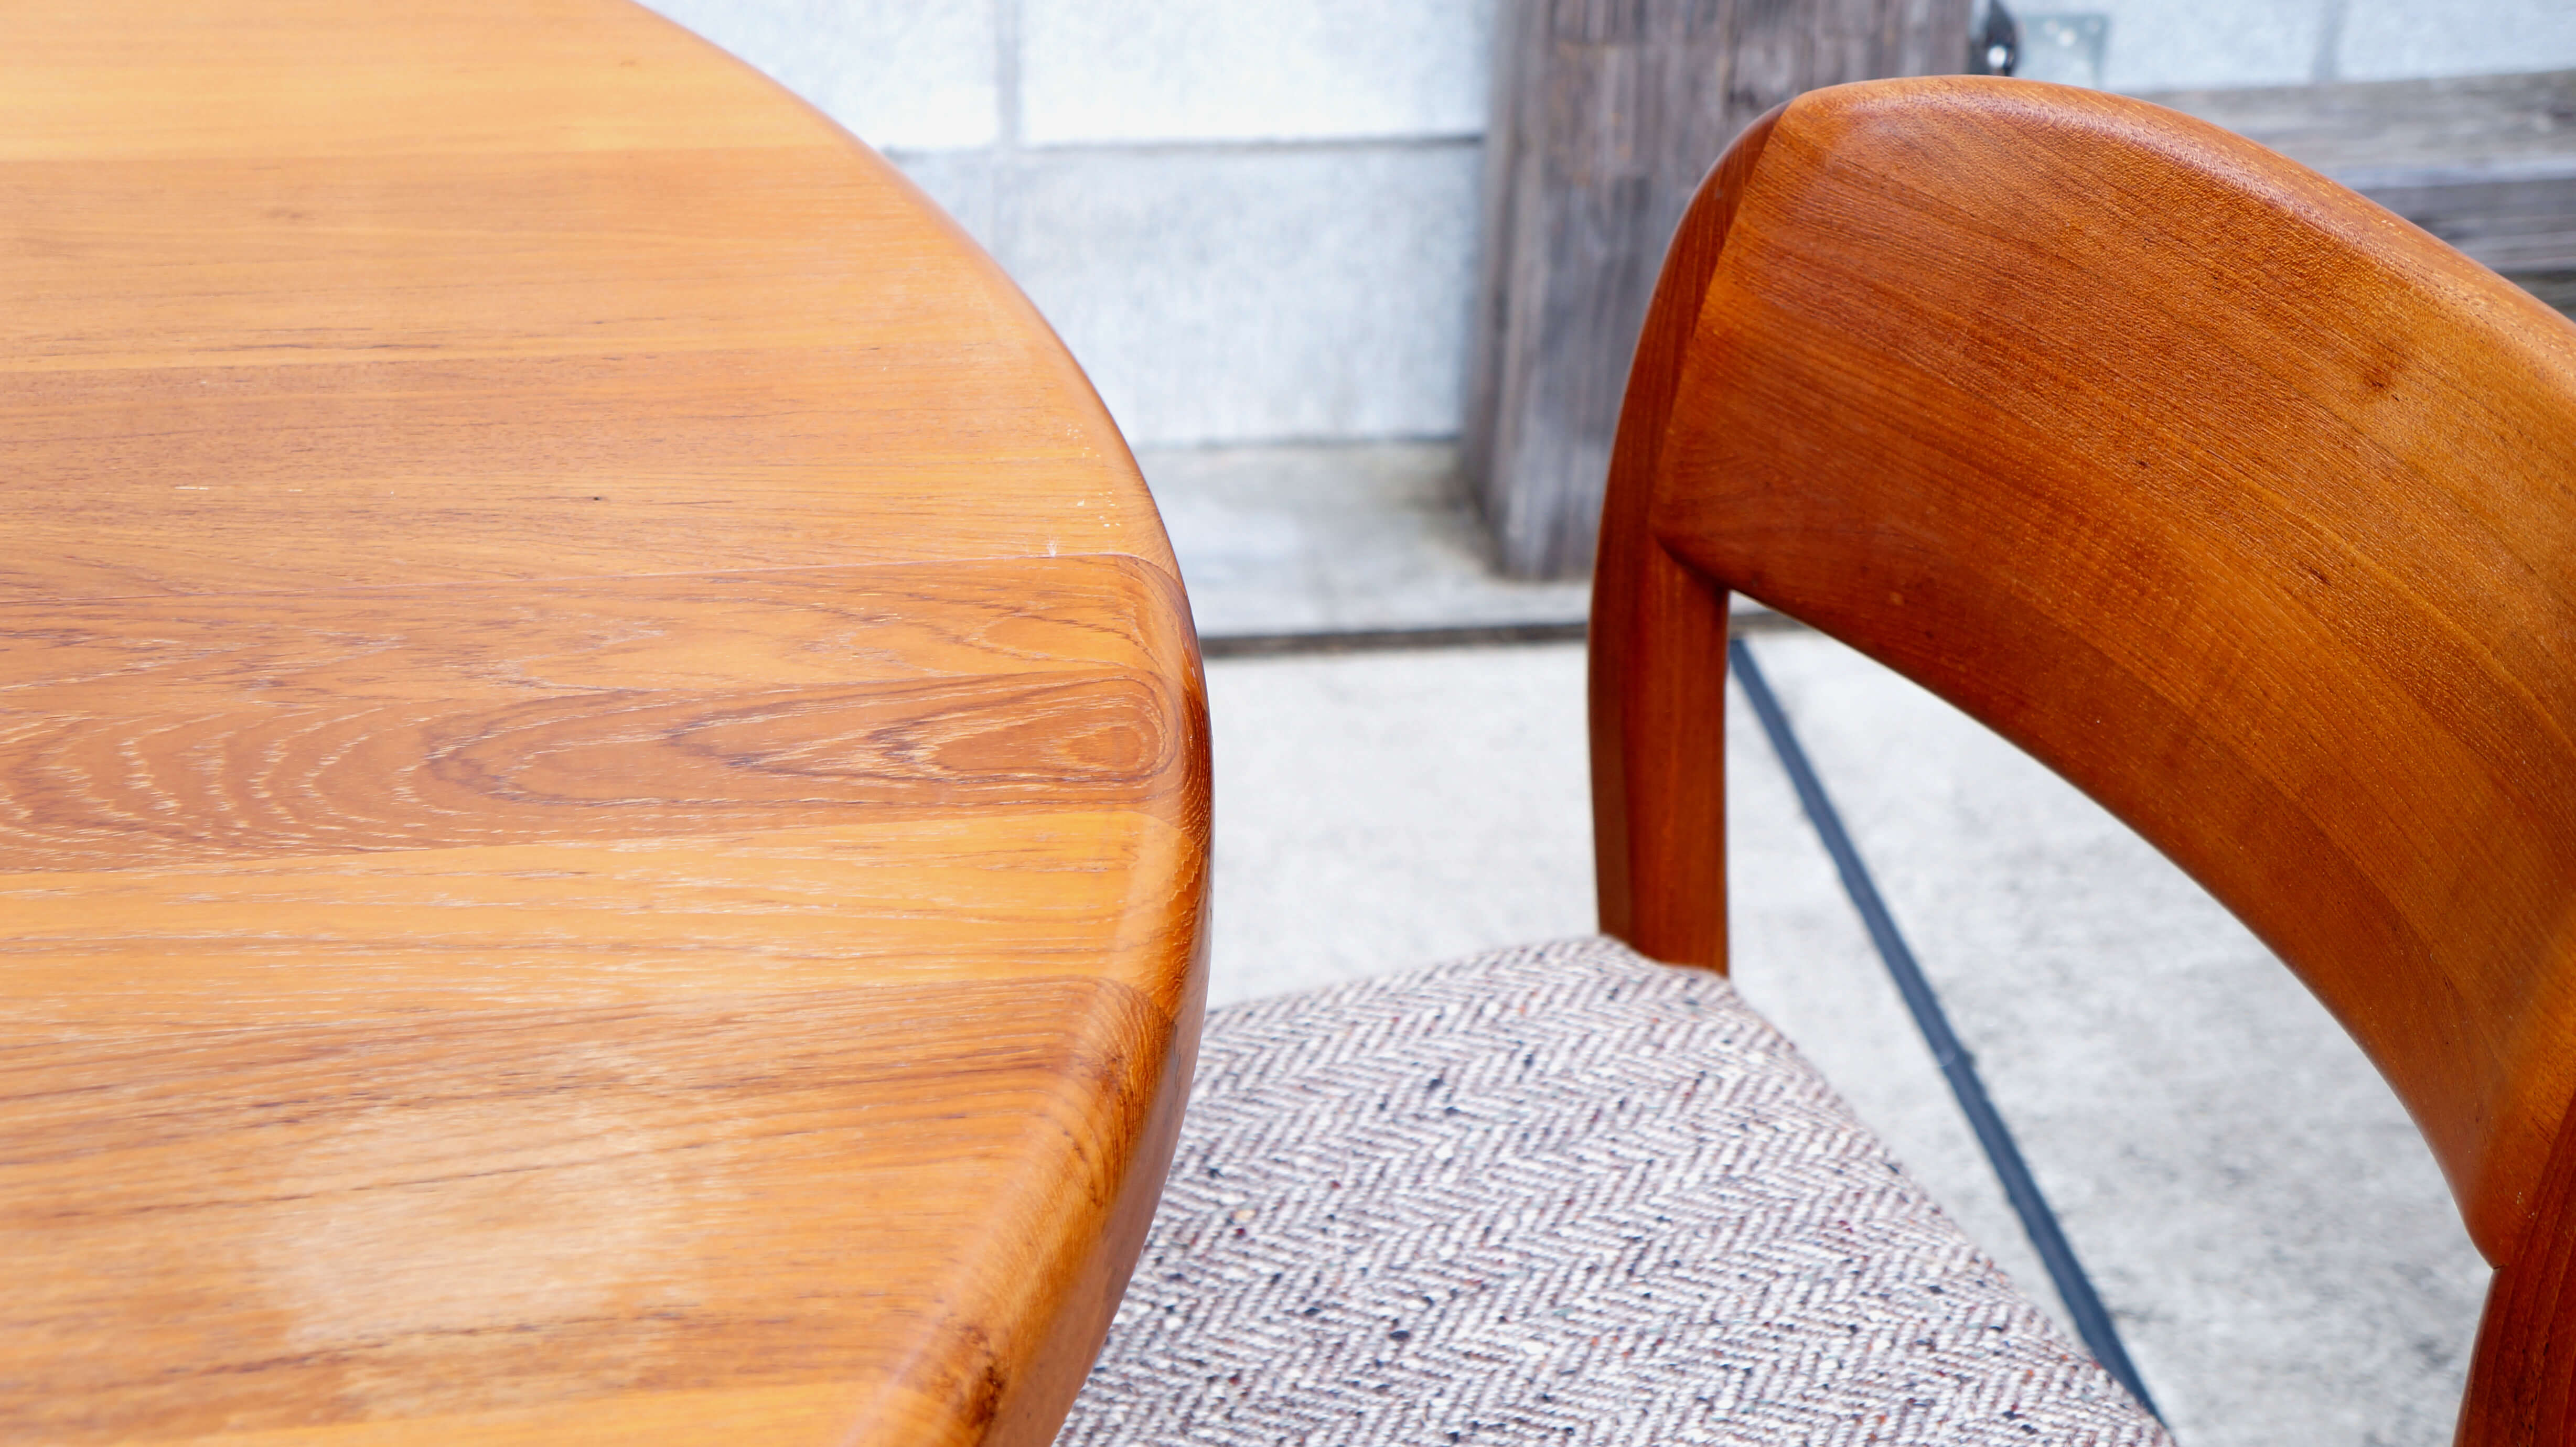 dylund Teak Wood Dining Table made in Denmark / デューロン社製 ダイニングテーブル チーク材 デンマーク製